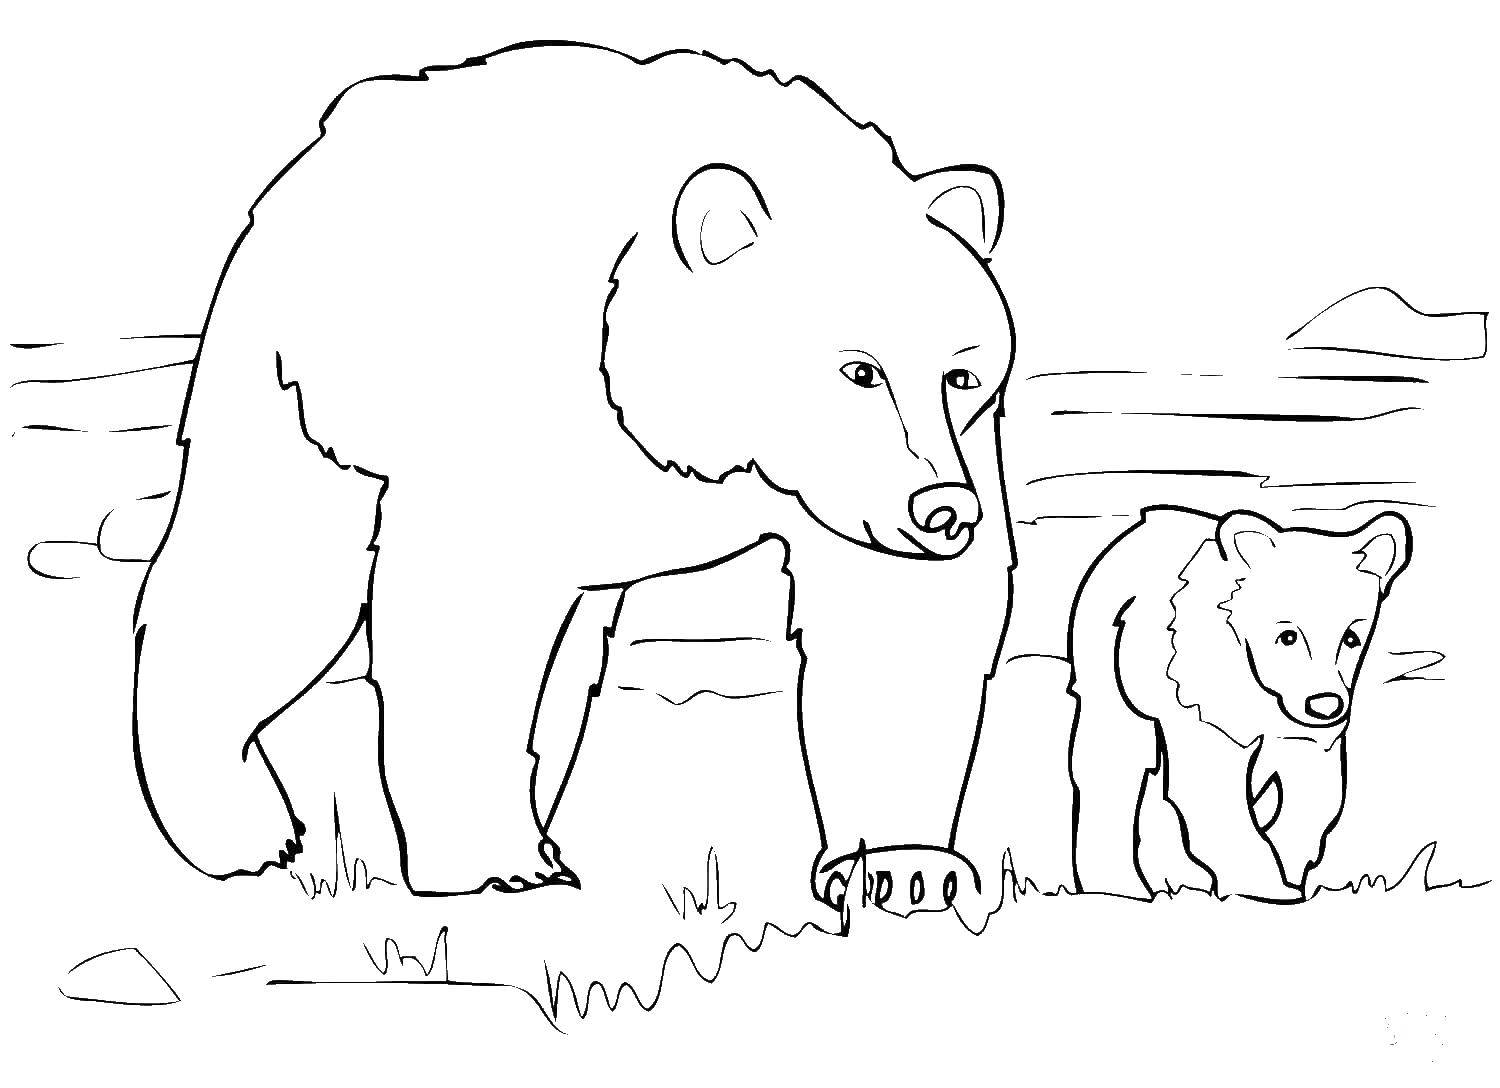 Coloring Bear and bear. Category Animals. Tags:  animals, bear, bear.